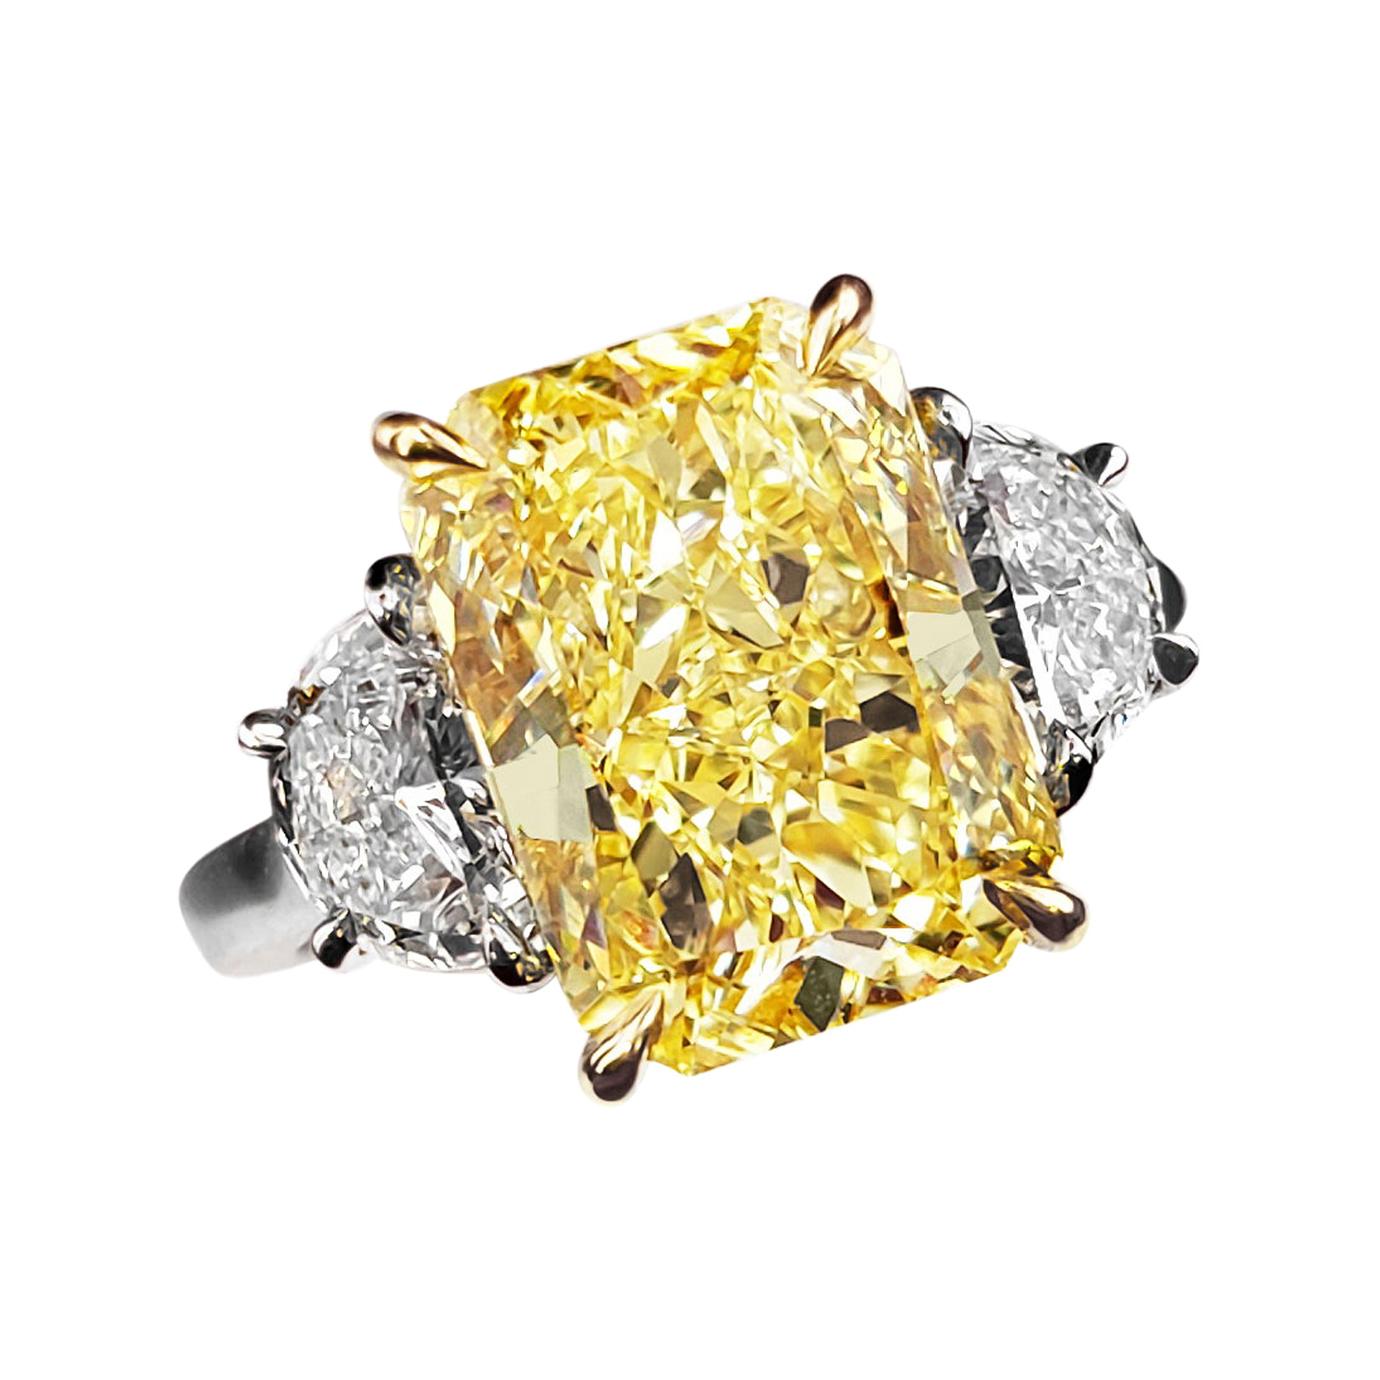 Scarselli 5 Karat Fancy Intense Yellow Diamond Ring in Platin GIA zertifiziert